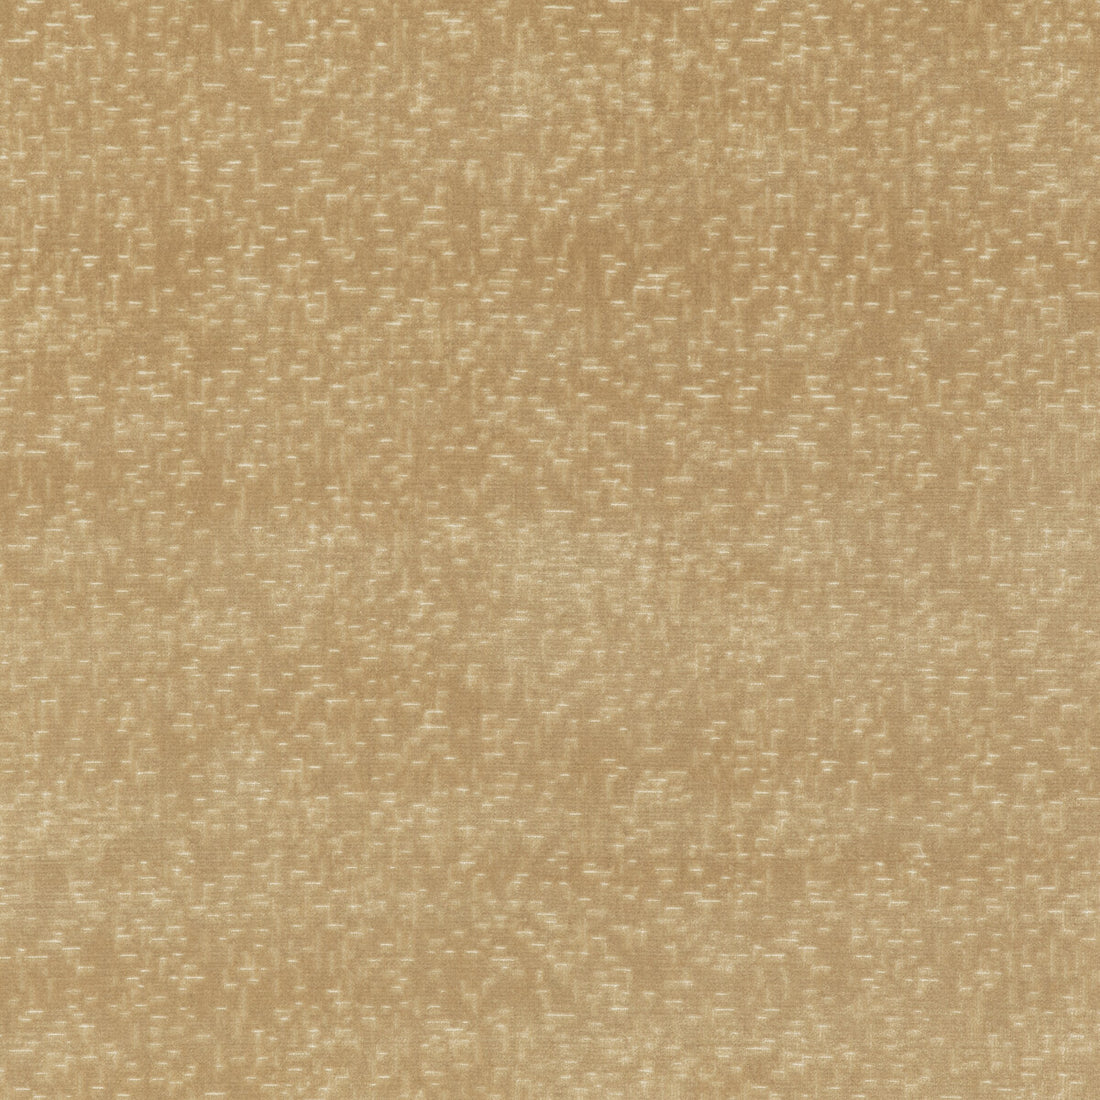 Alma Velvet fabric in sand color - pattern BF10827.130.0 - by G P &amp; J Baker in the Coromandel Velvets collection